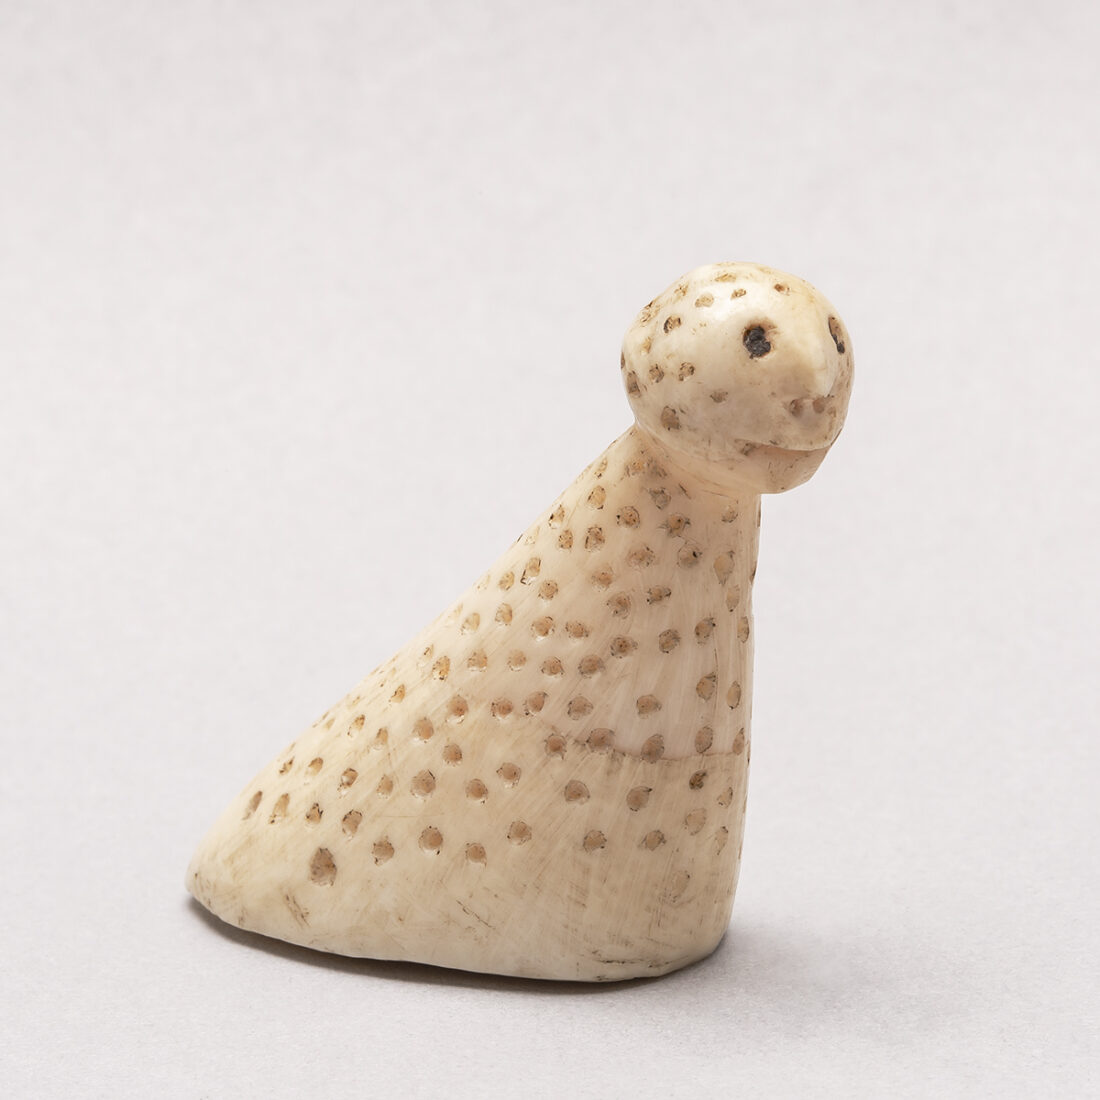 Sea Lion Figurine
presumably Chukchi
Sibiria
before 1891
Ivory or bone